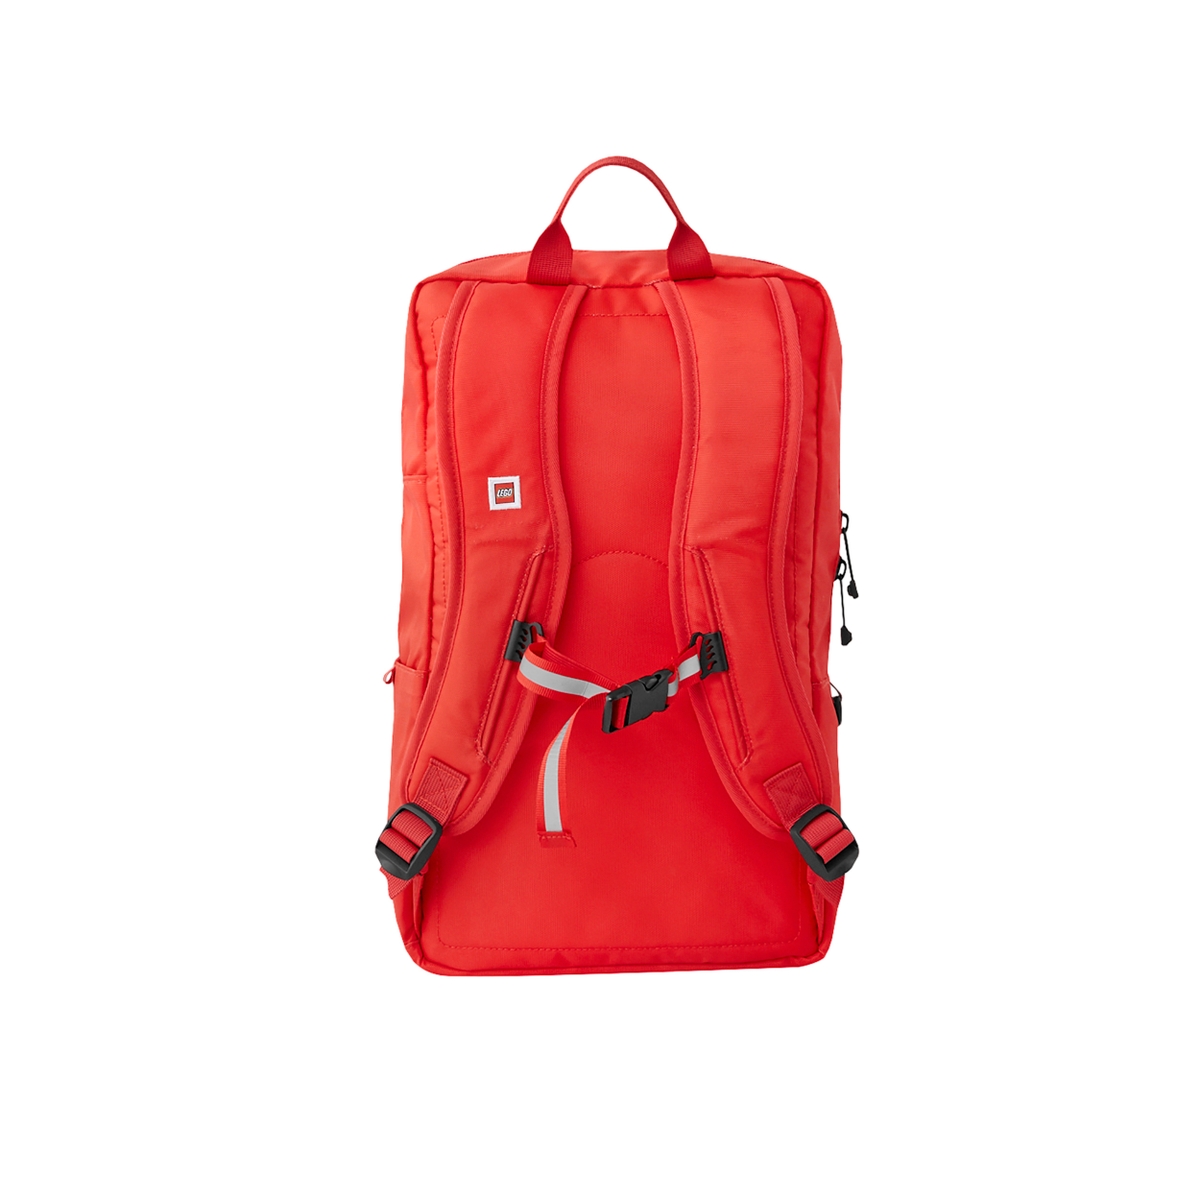 lego 5007253 brick backpack red